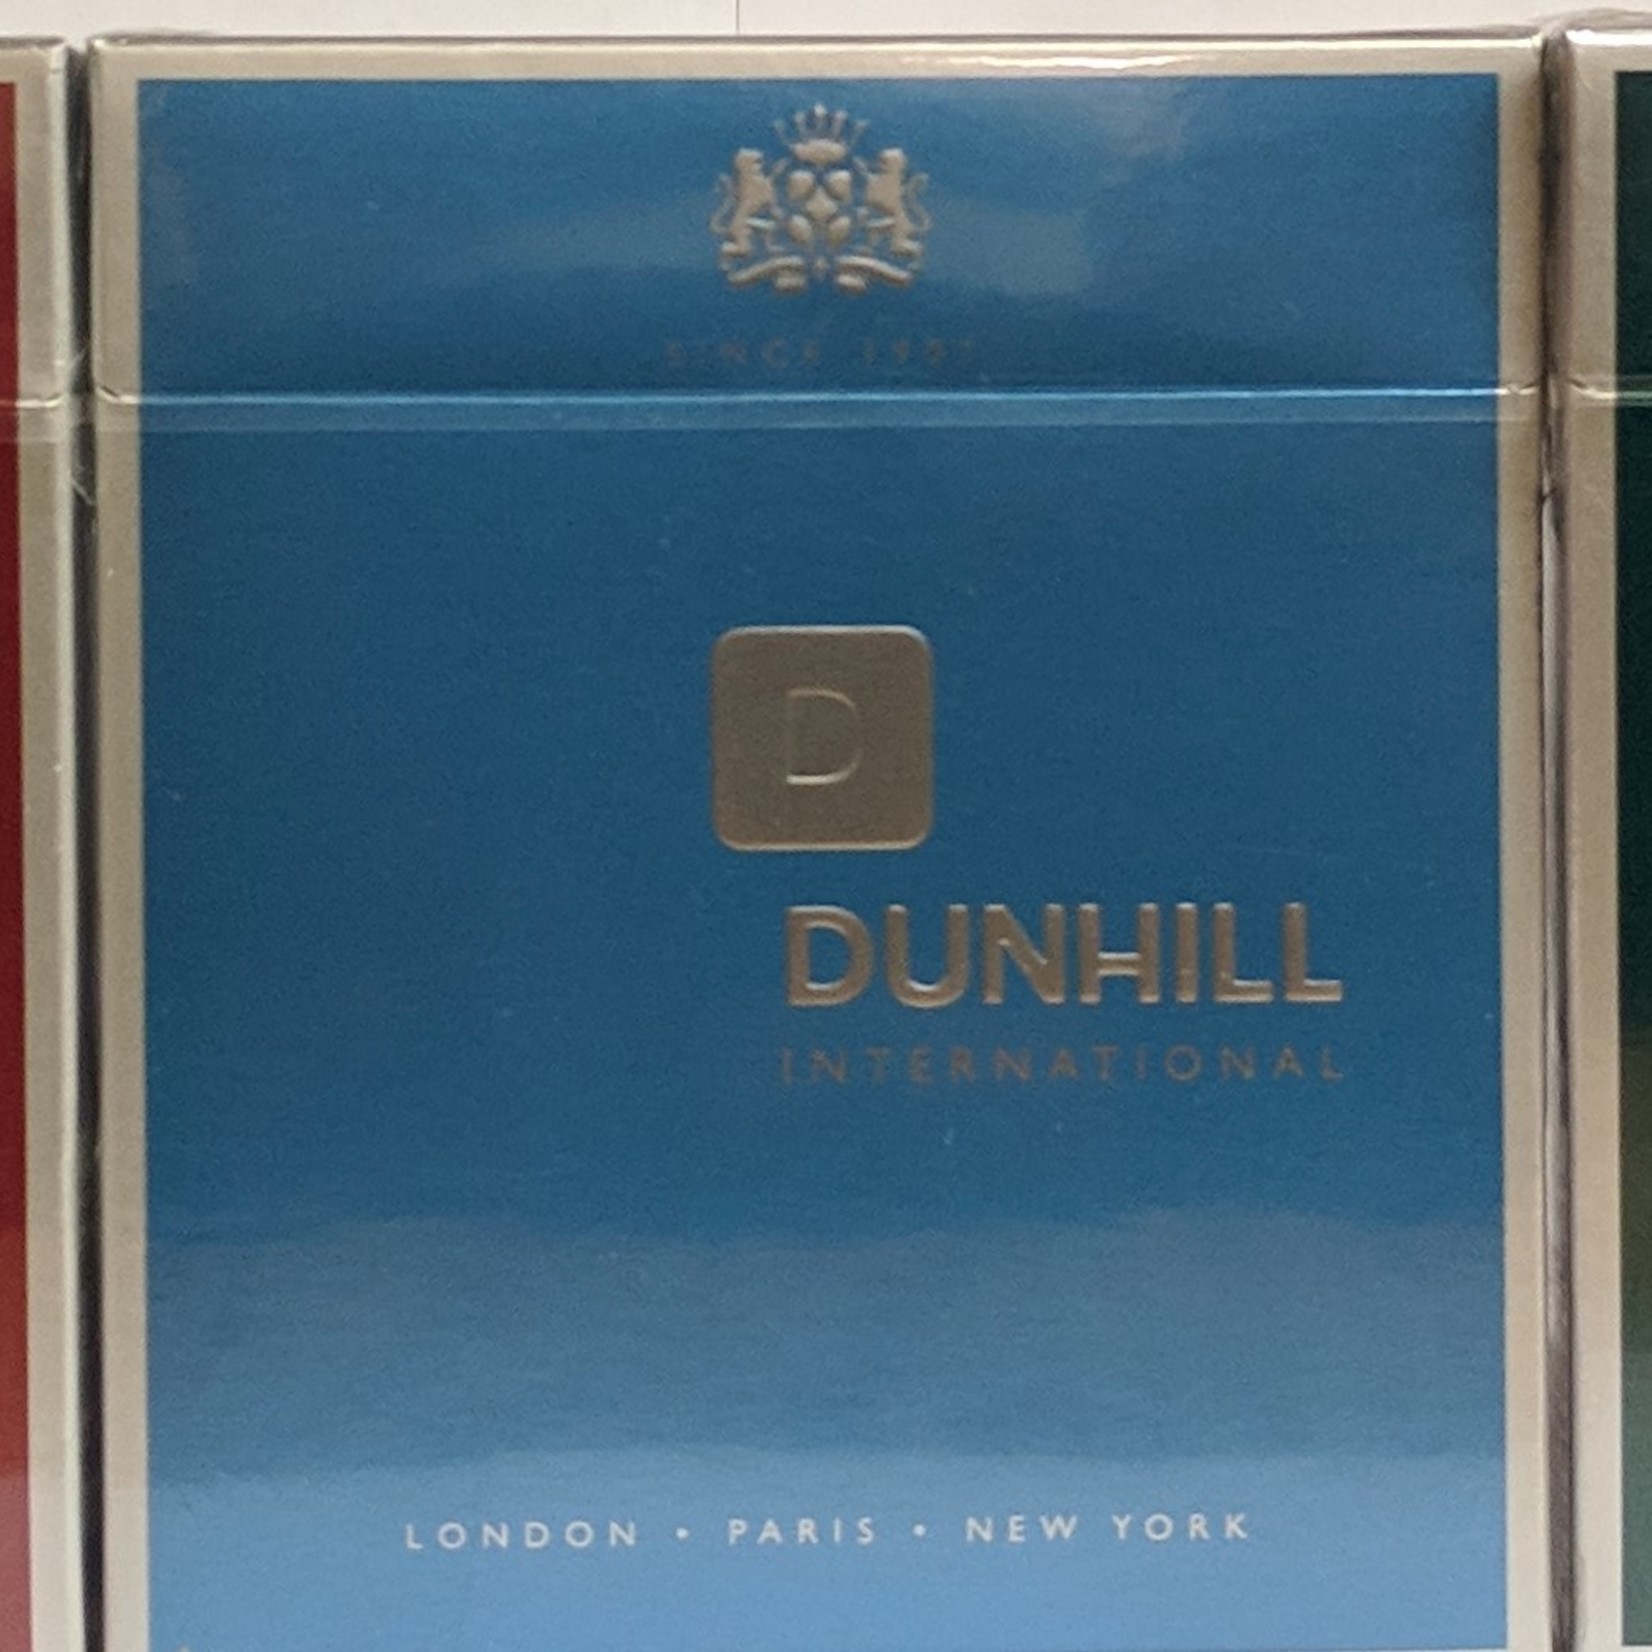 Dunhill International (London - UK)